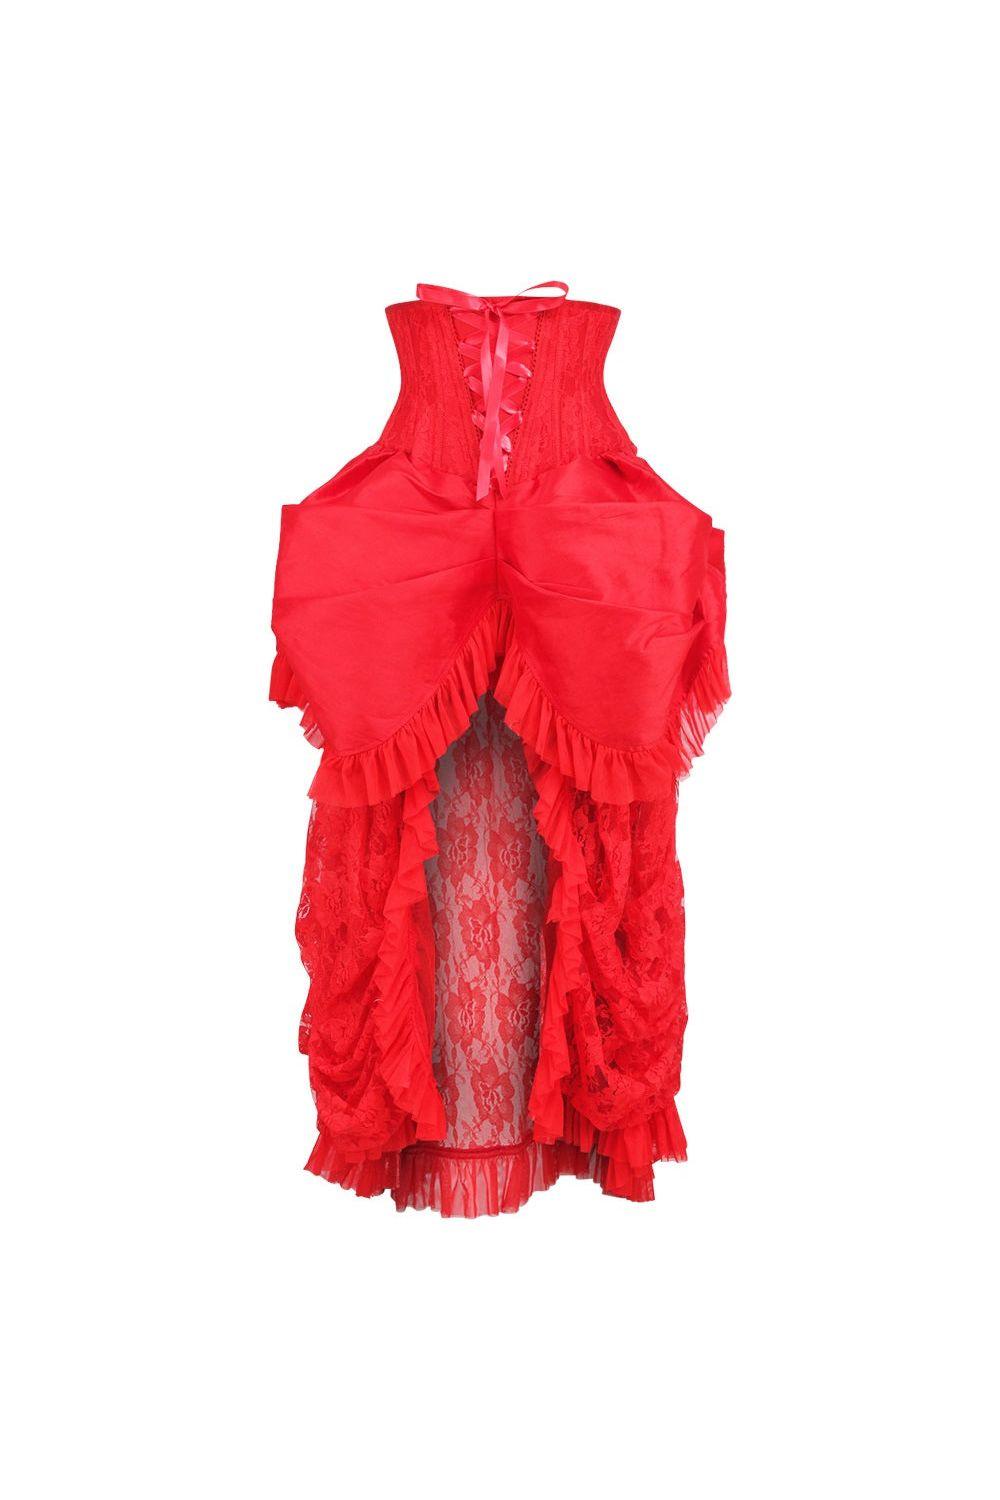 Top Drawer Steel Boned Red Lace Victorian Bustle Underbust Corset Dress - AMIClubwear